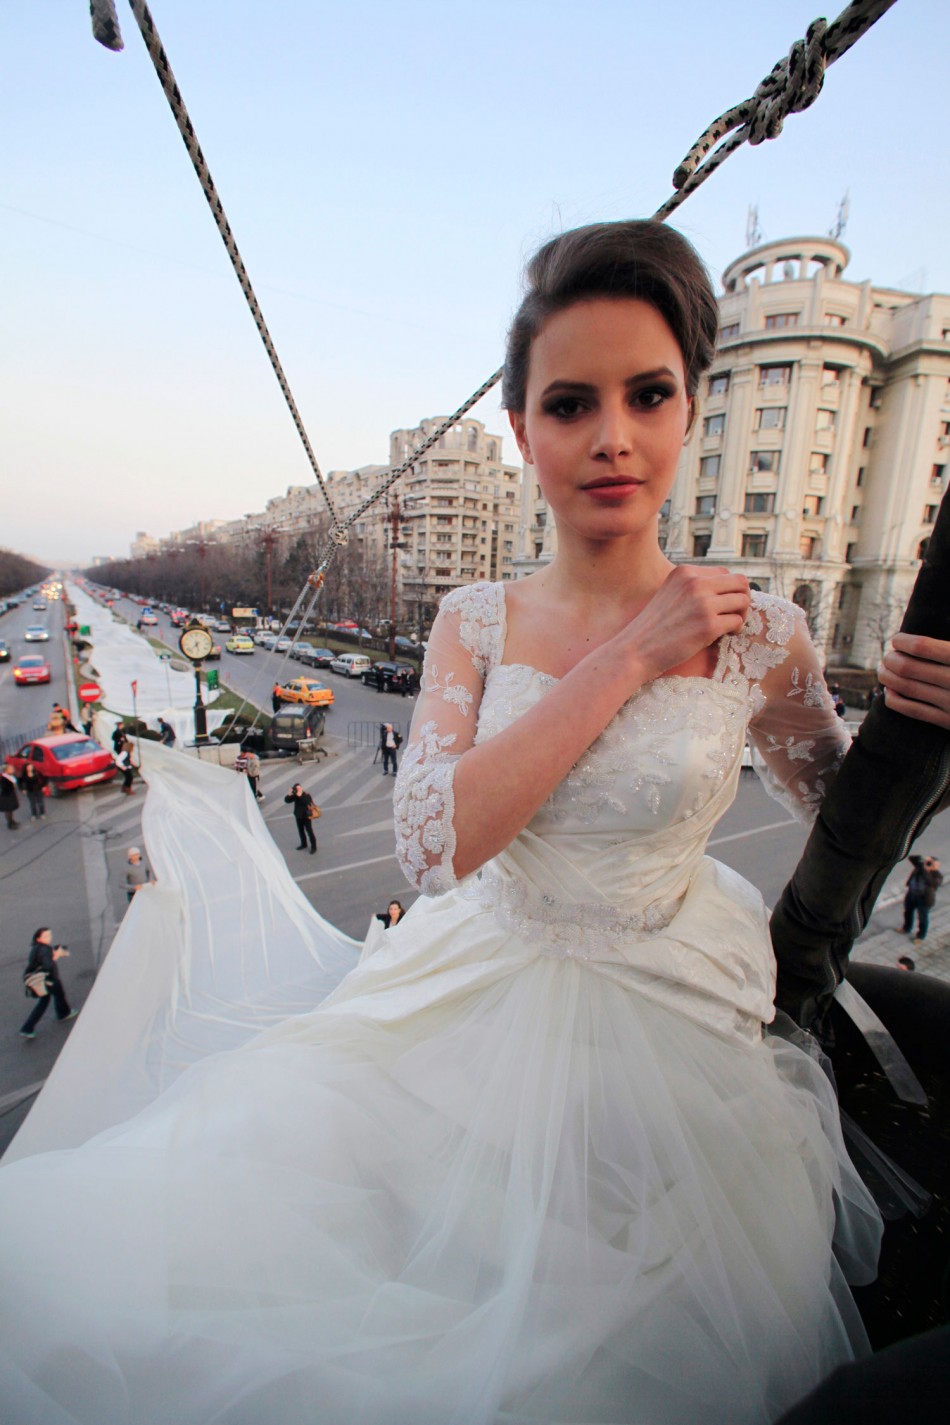 Longest Wedding Dress Romanian Models Wins World Records for 2,750 Meter Train